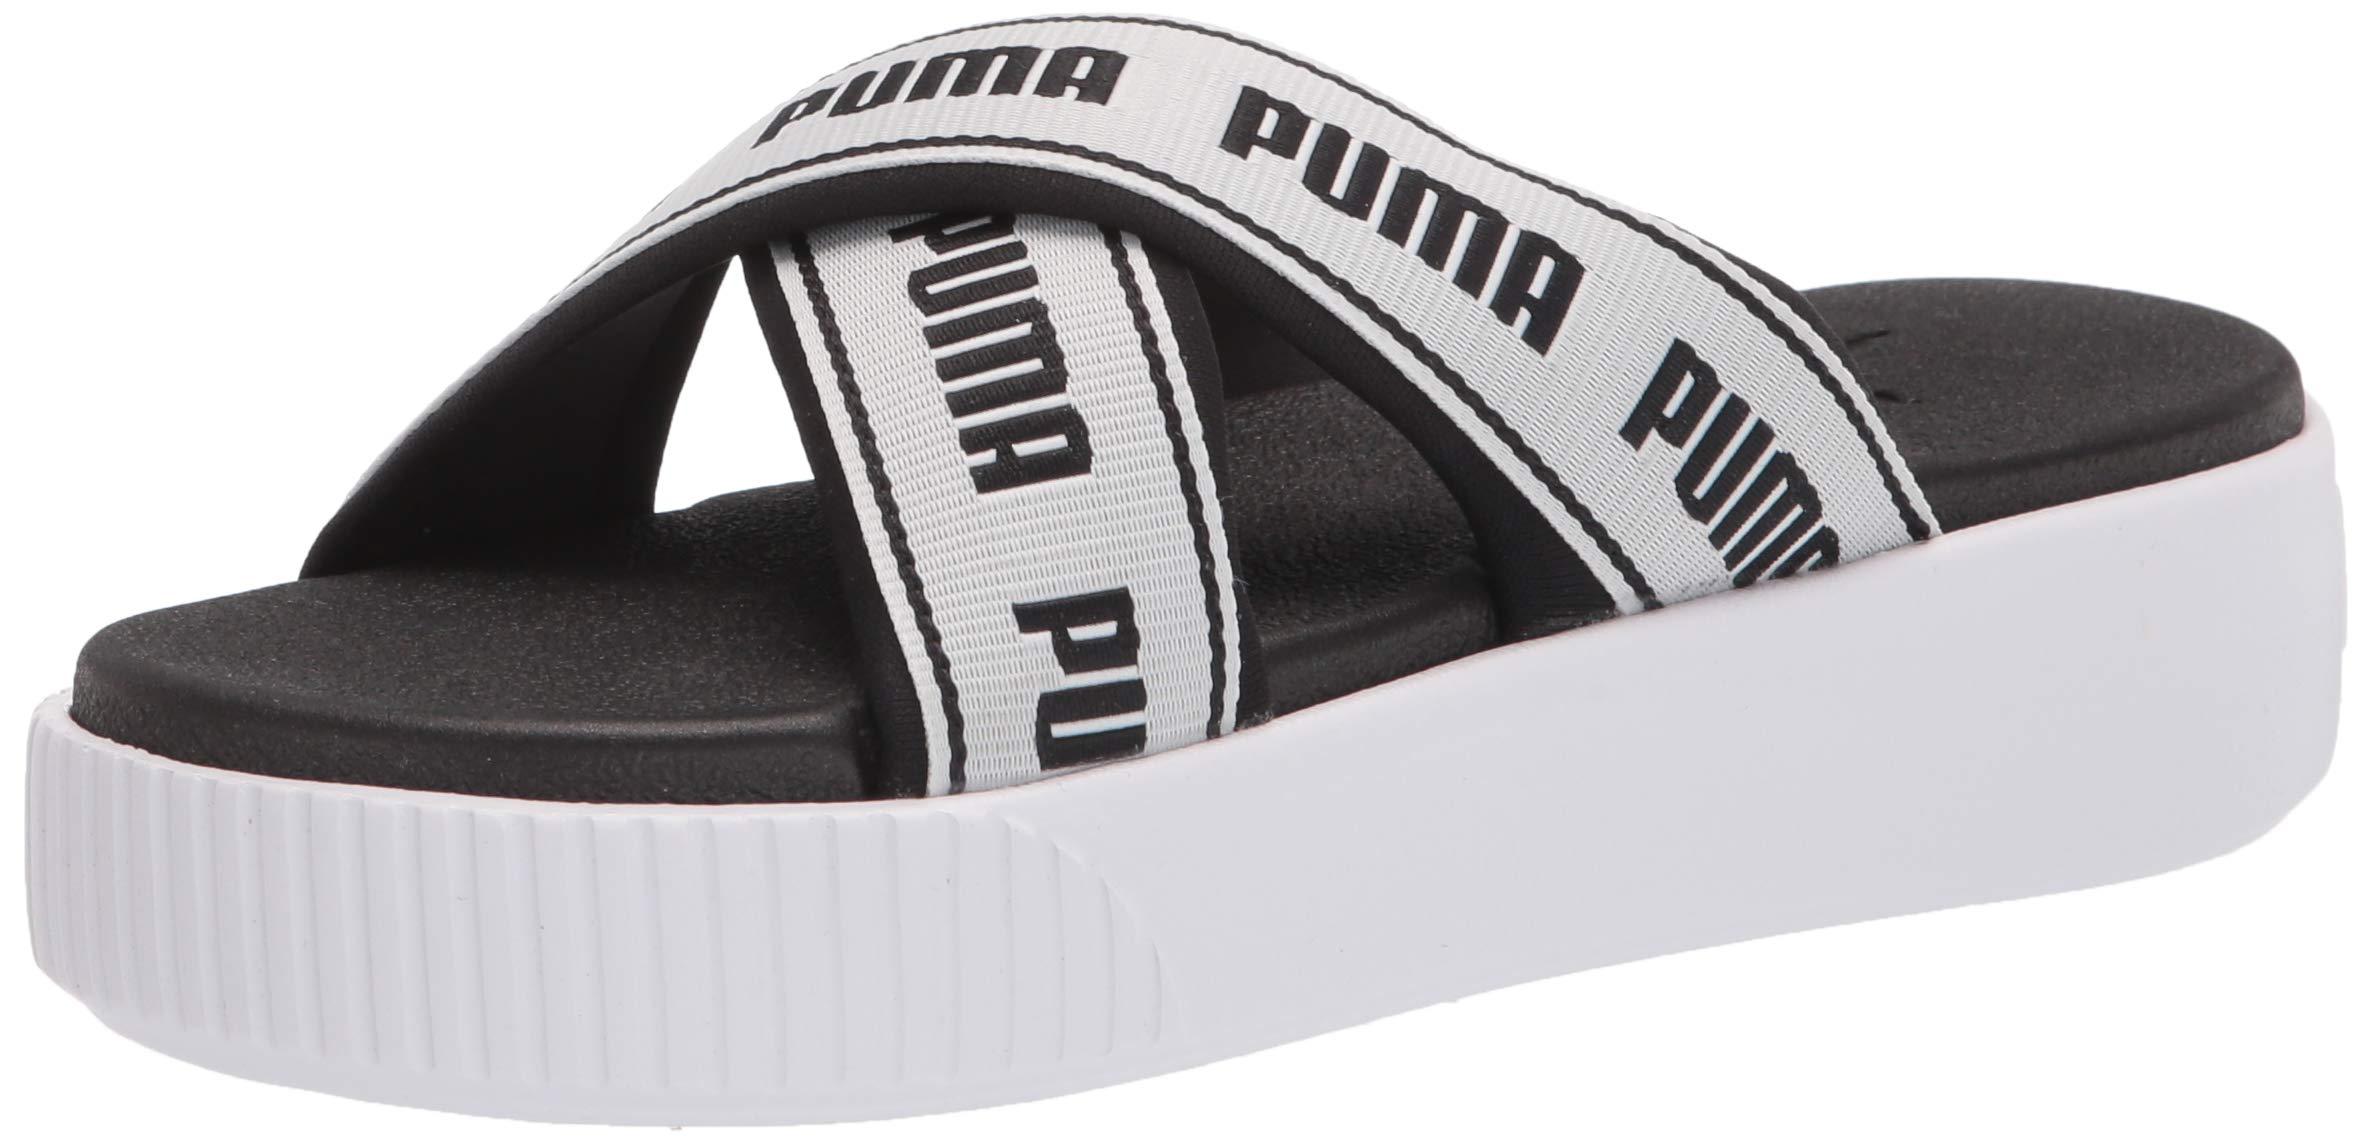 PUMA Leather Womens Platform Slide Sandal in White/Black (Black) - Save 56%  - Lyst